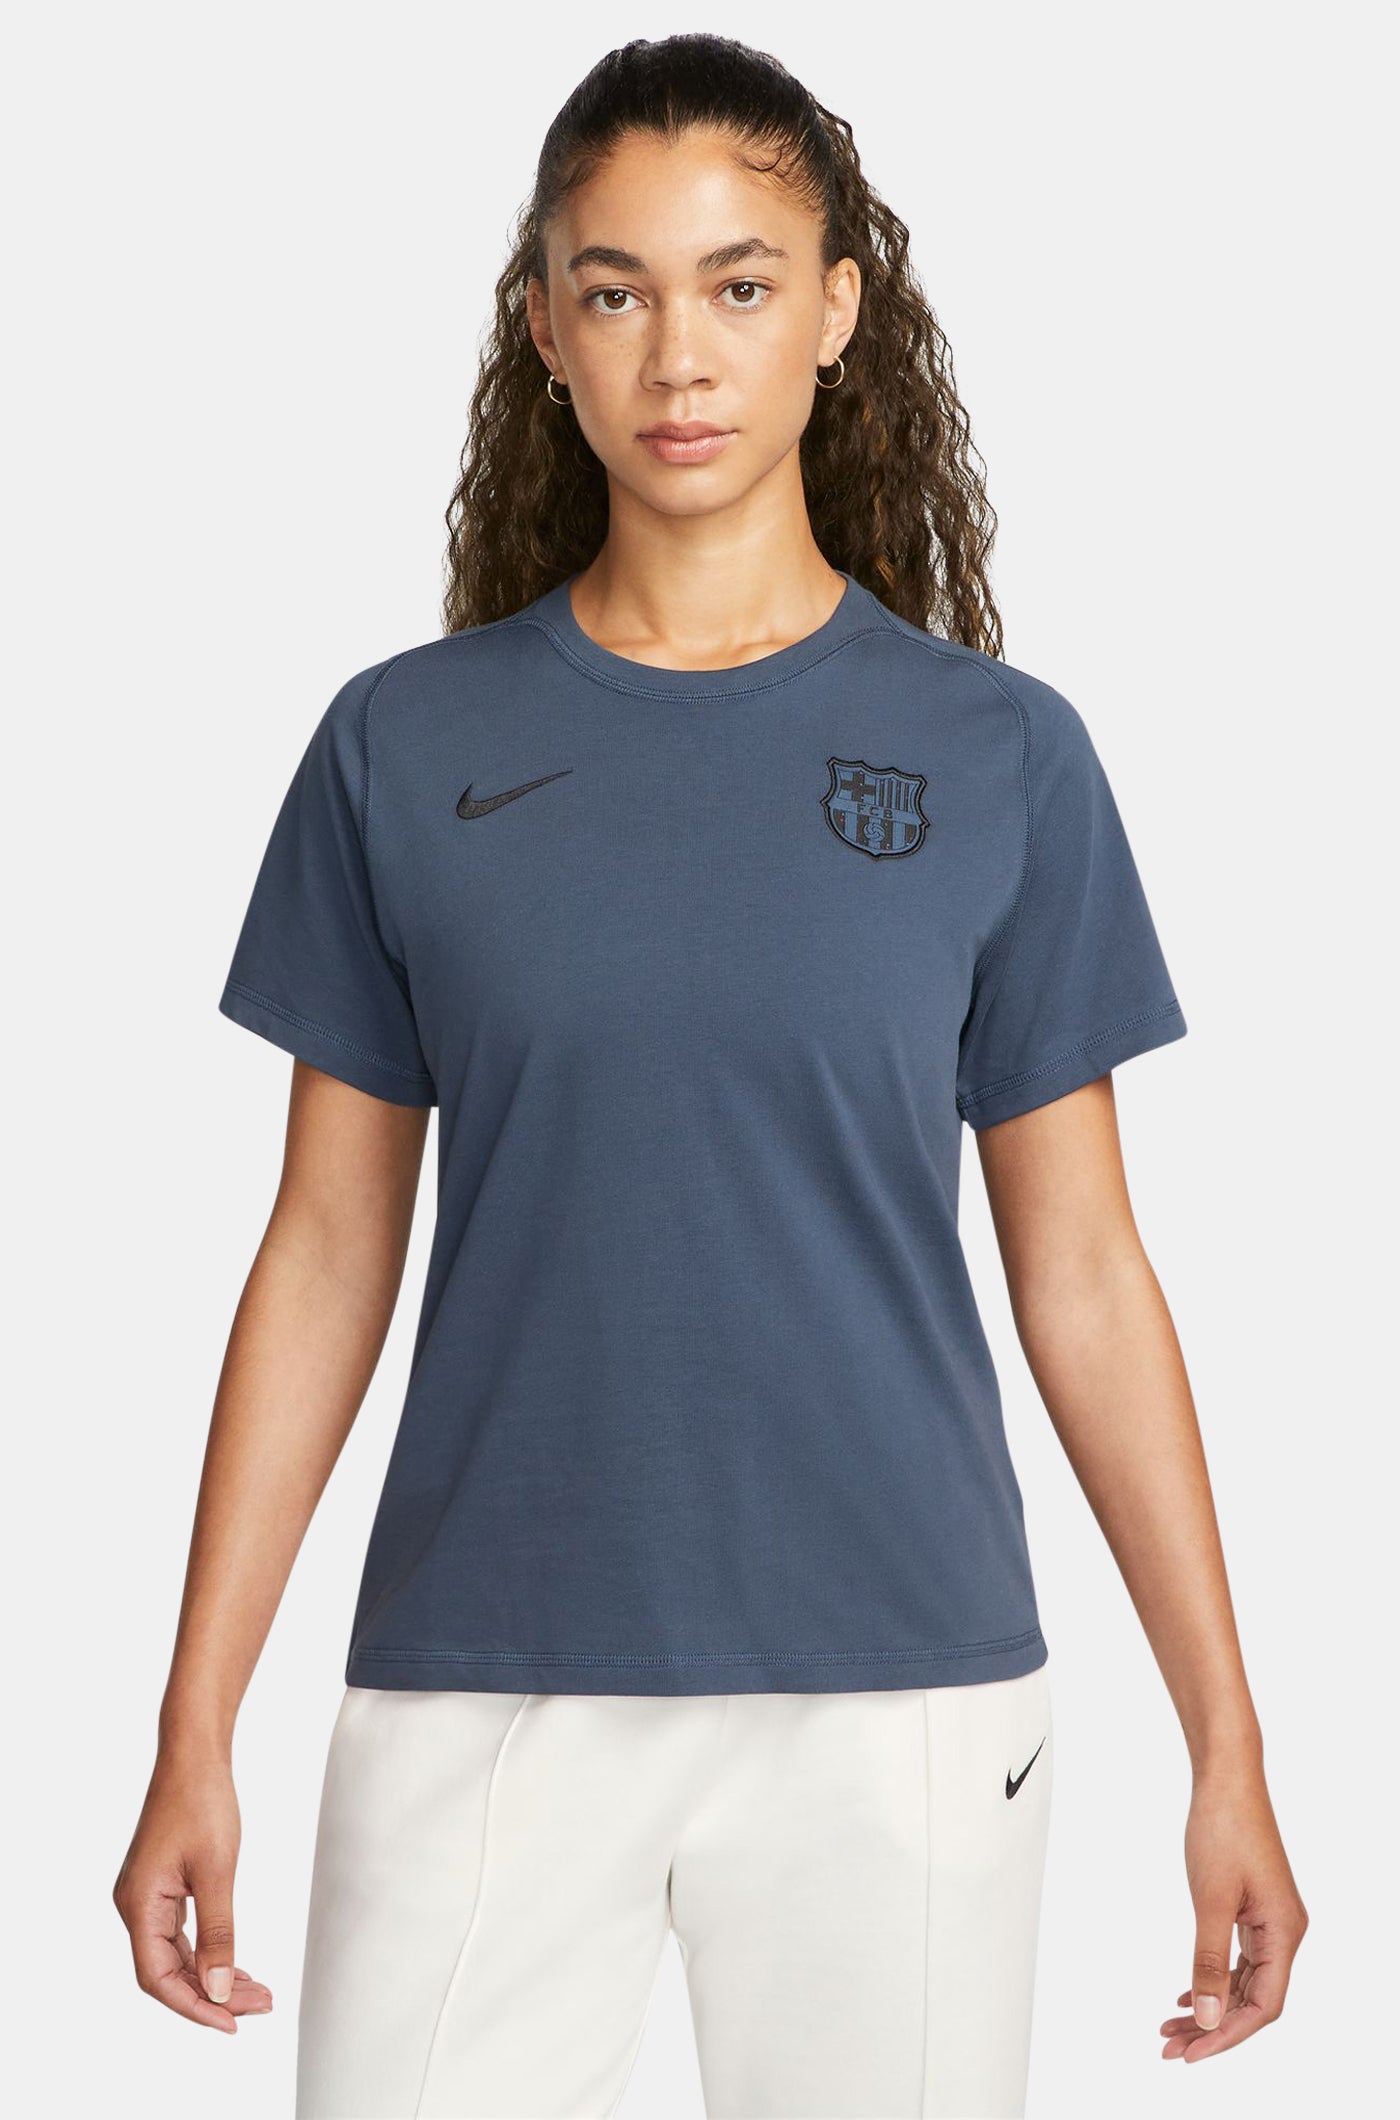 Barça Nike blue Hoodie – Women – Barça Official Store Spotify Camp Nou